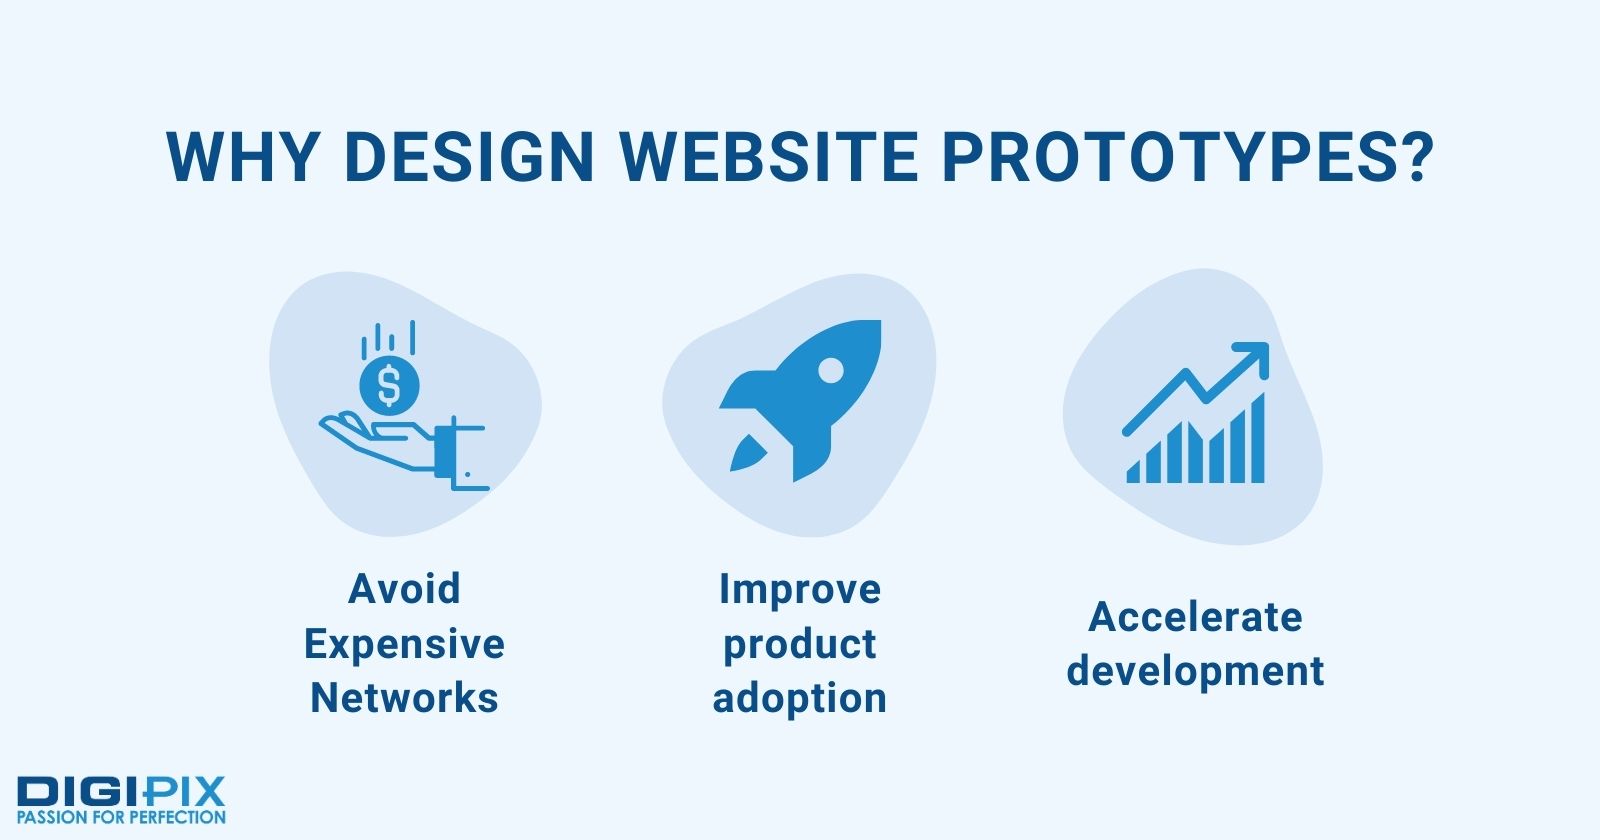 Reasons to Design Website Prototypes